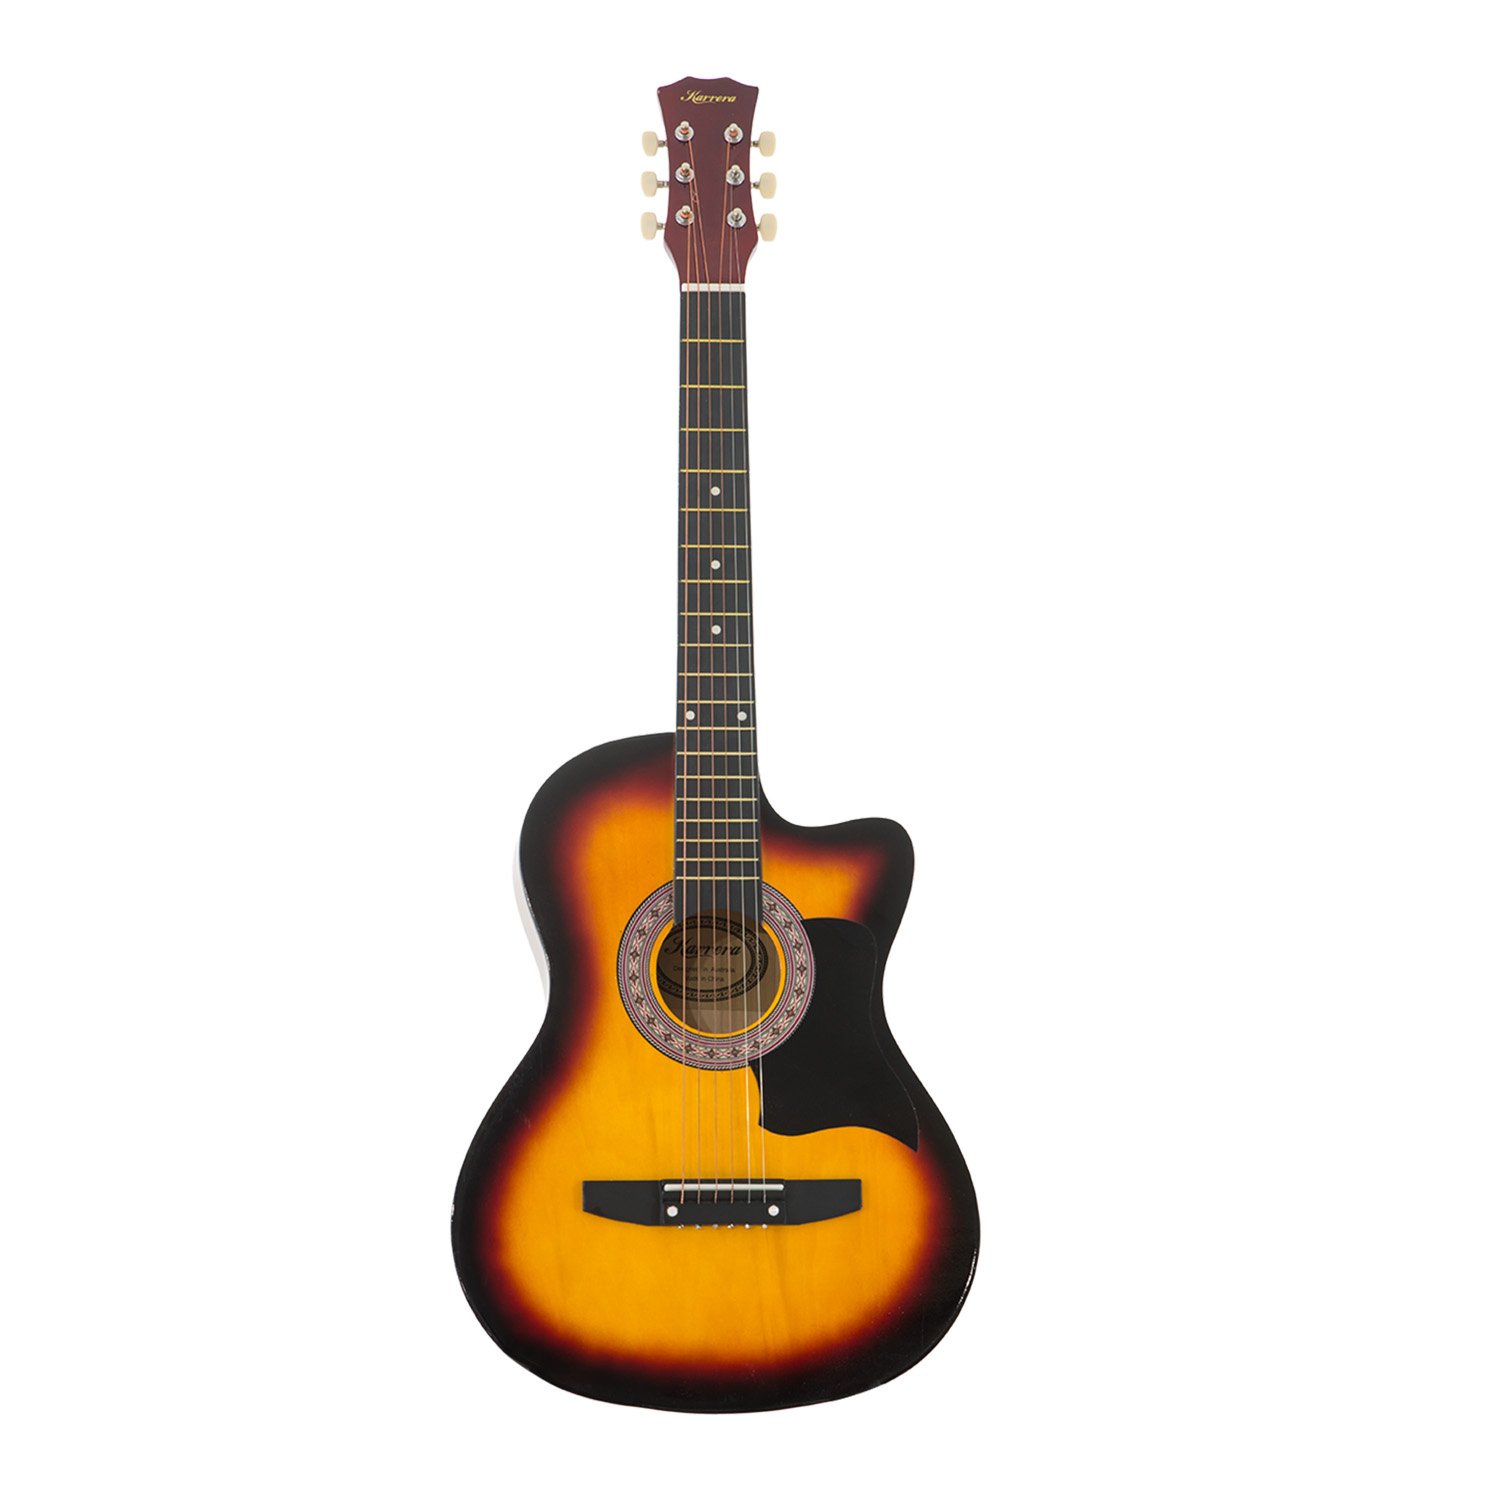 Karrera 38in Pro Cutaway Acoustic Guitar with Bag Strings - Sun Burst 1